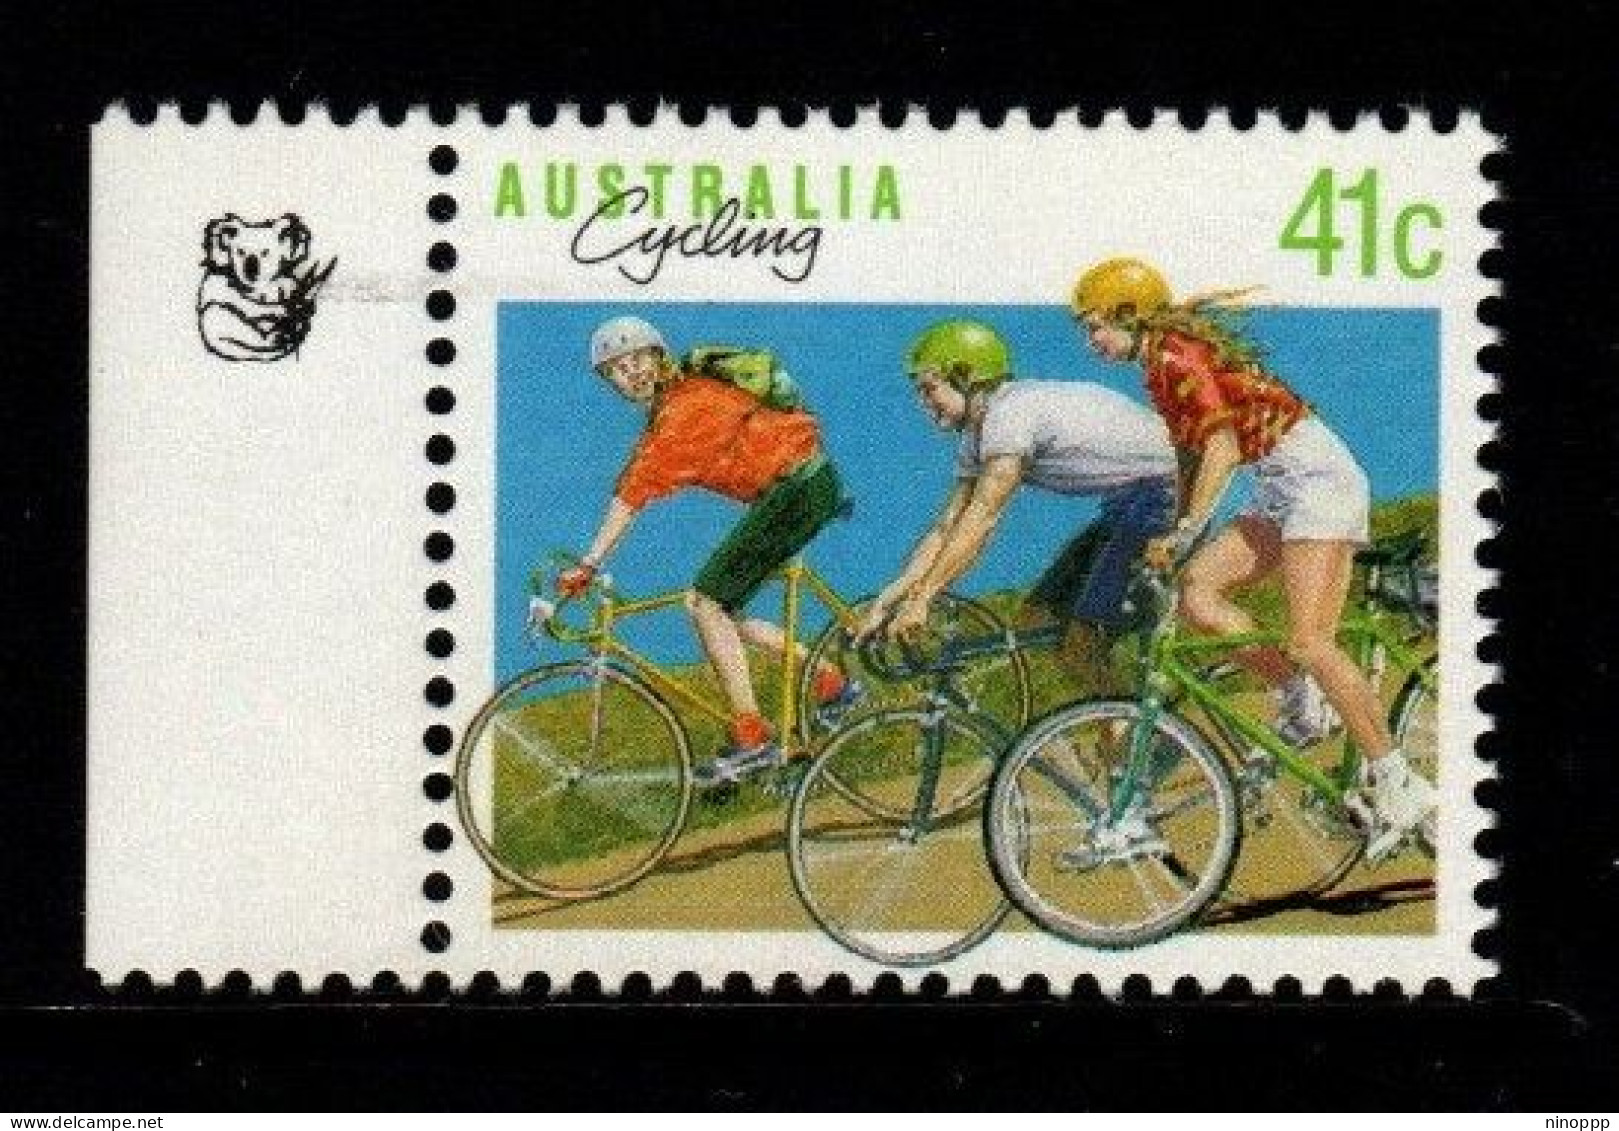 Australia Cat 1208b  Sports 41c Cycling, 1 Koalas Reprint,mint Never Hinged - Proeven & Herdruk